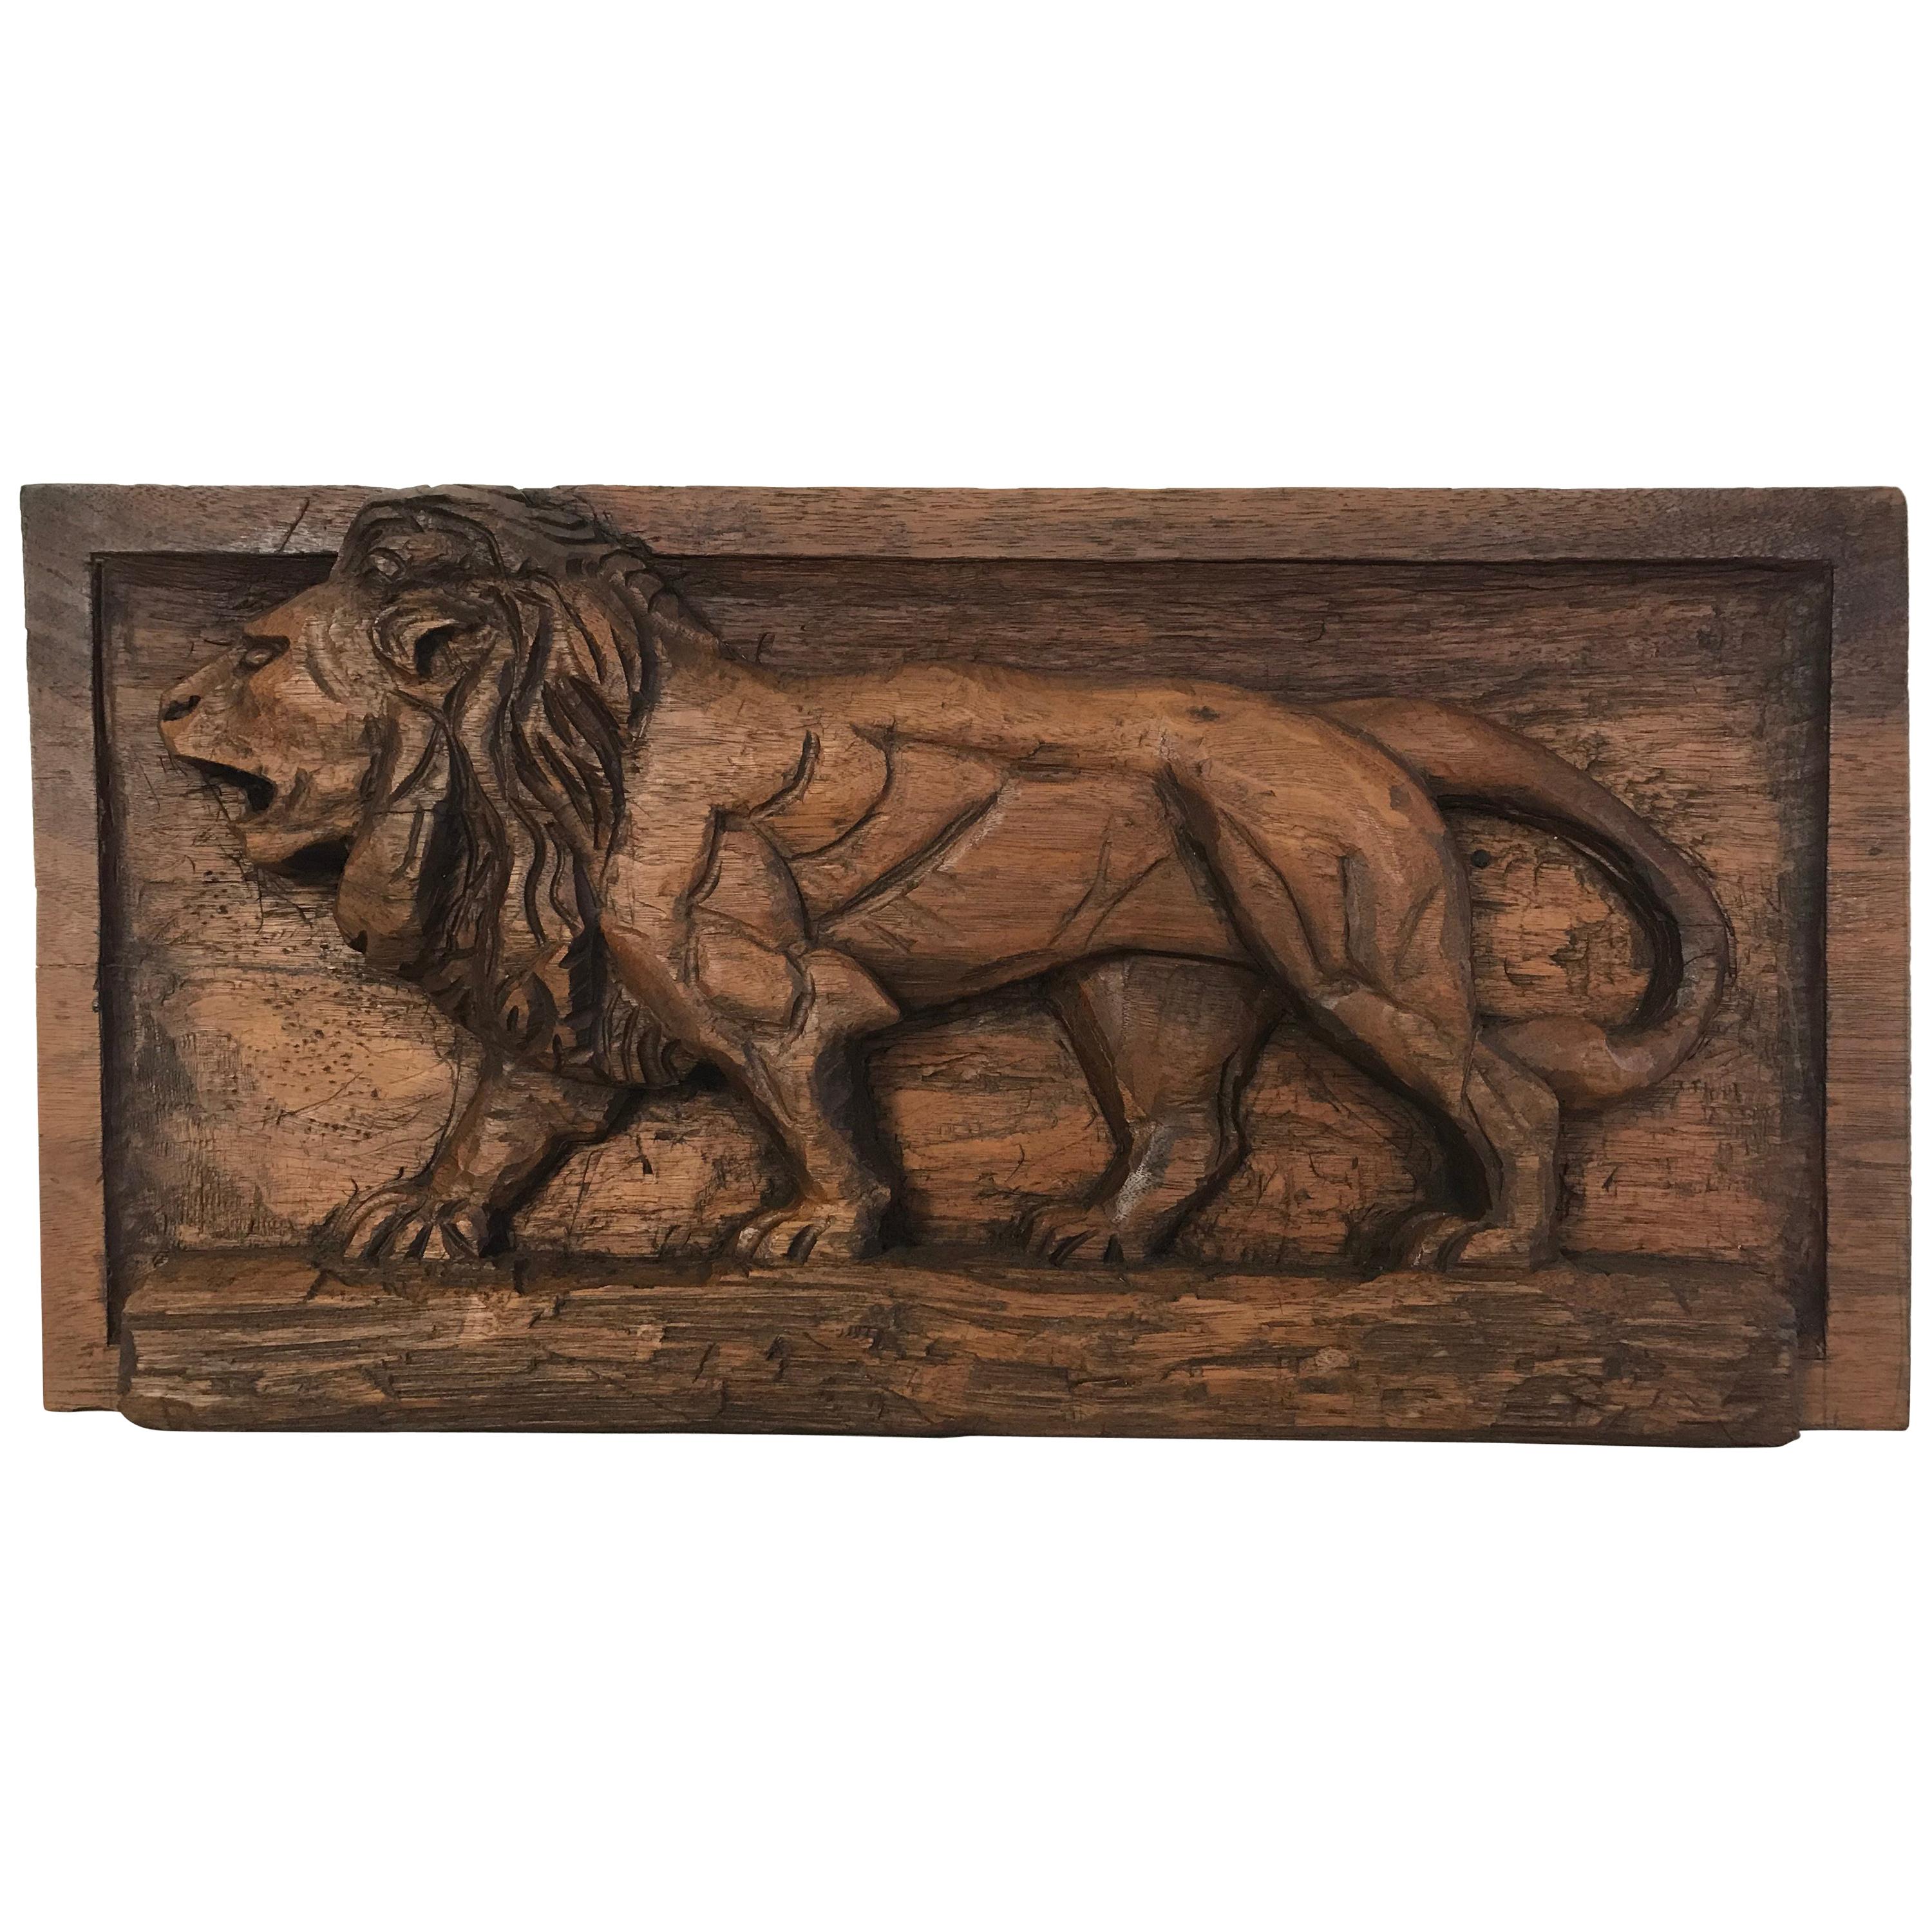 Carved Folk Art Relief Plaque of a Lion